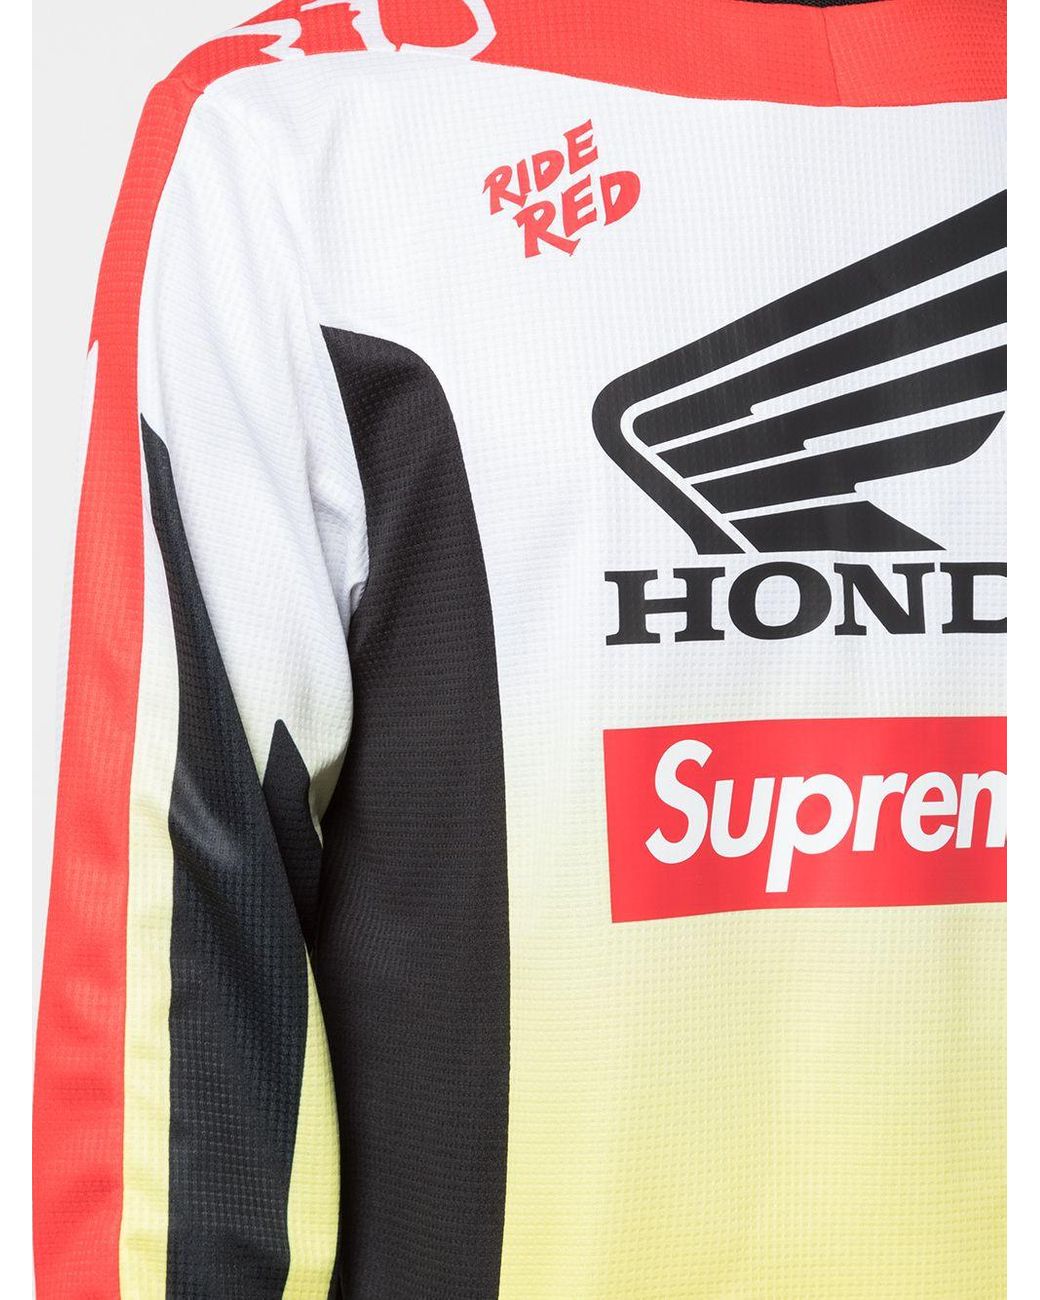 Supreme Honda Fox Racing Moto Jersey Top in Red for Men - Save 